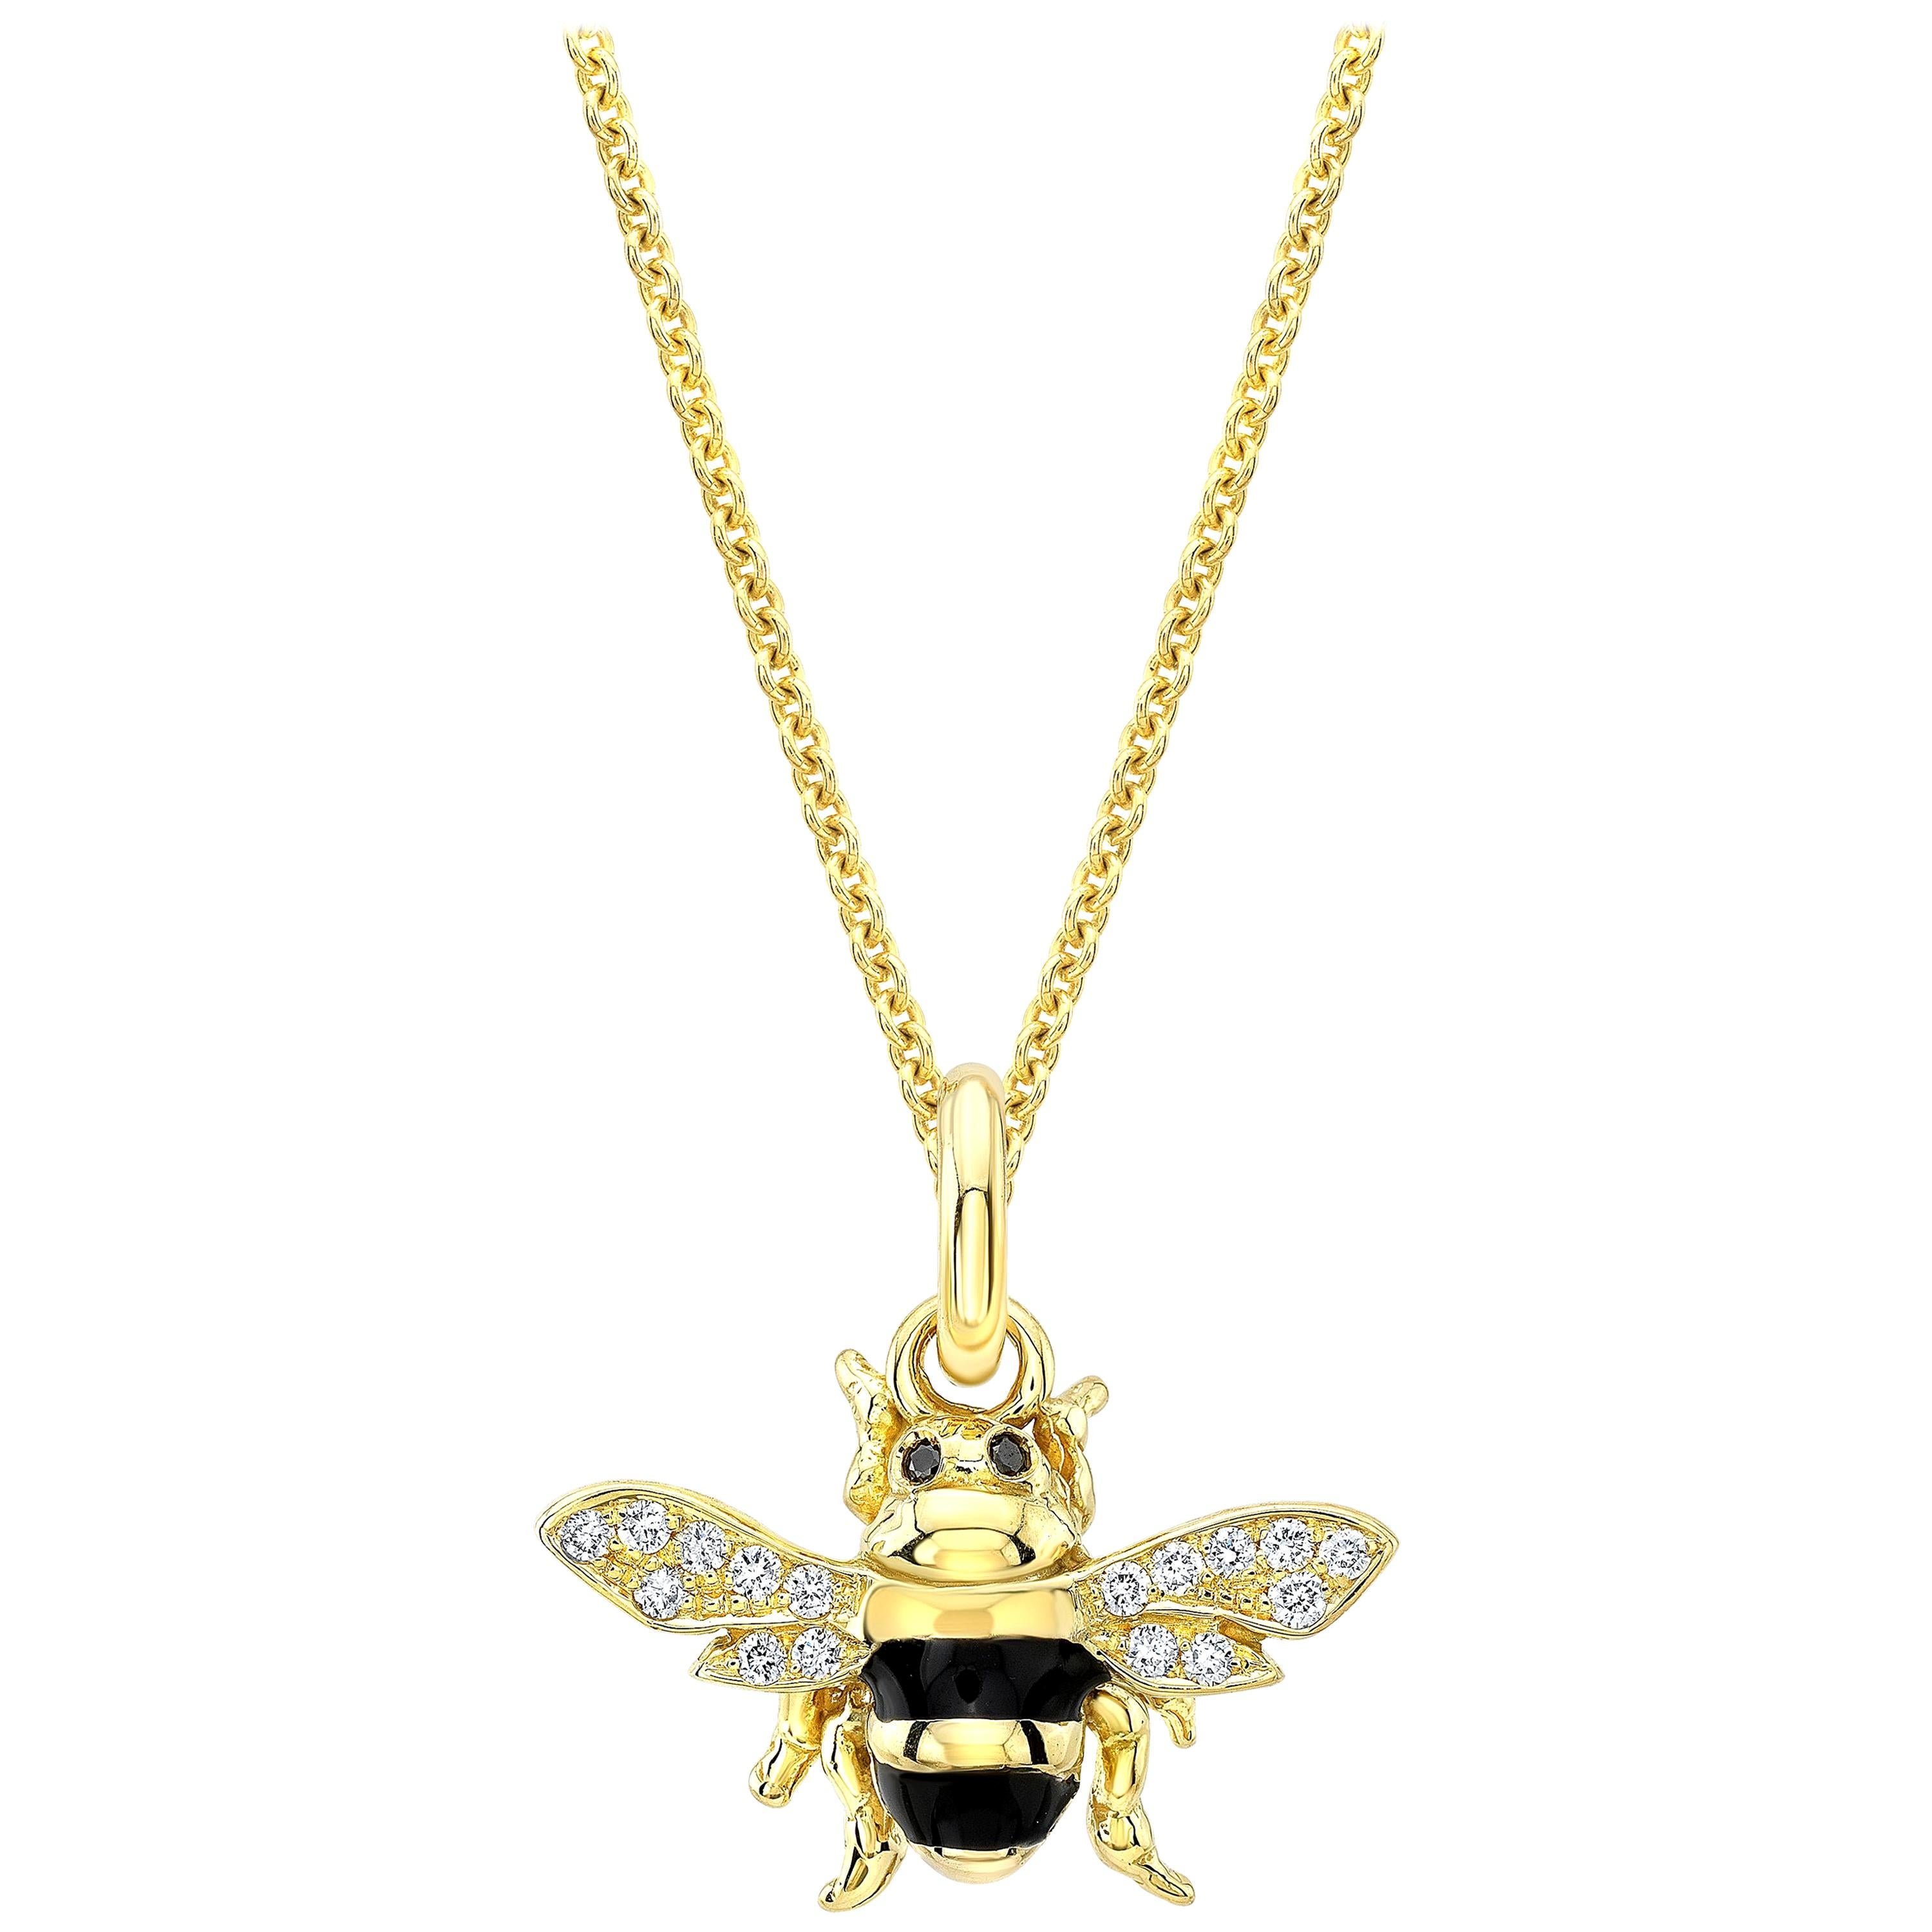 18 Karat Gold, Diamond, Sapphire and Enamel Pendant/Charm Necklace 'Honey Bee'